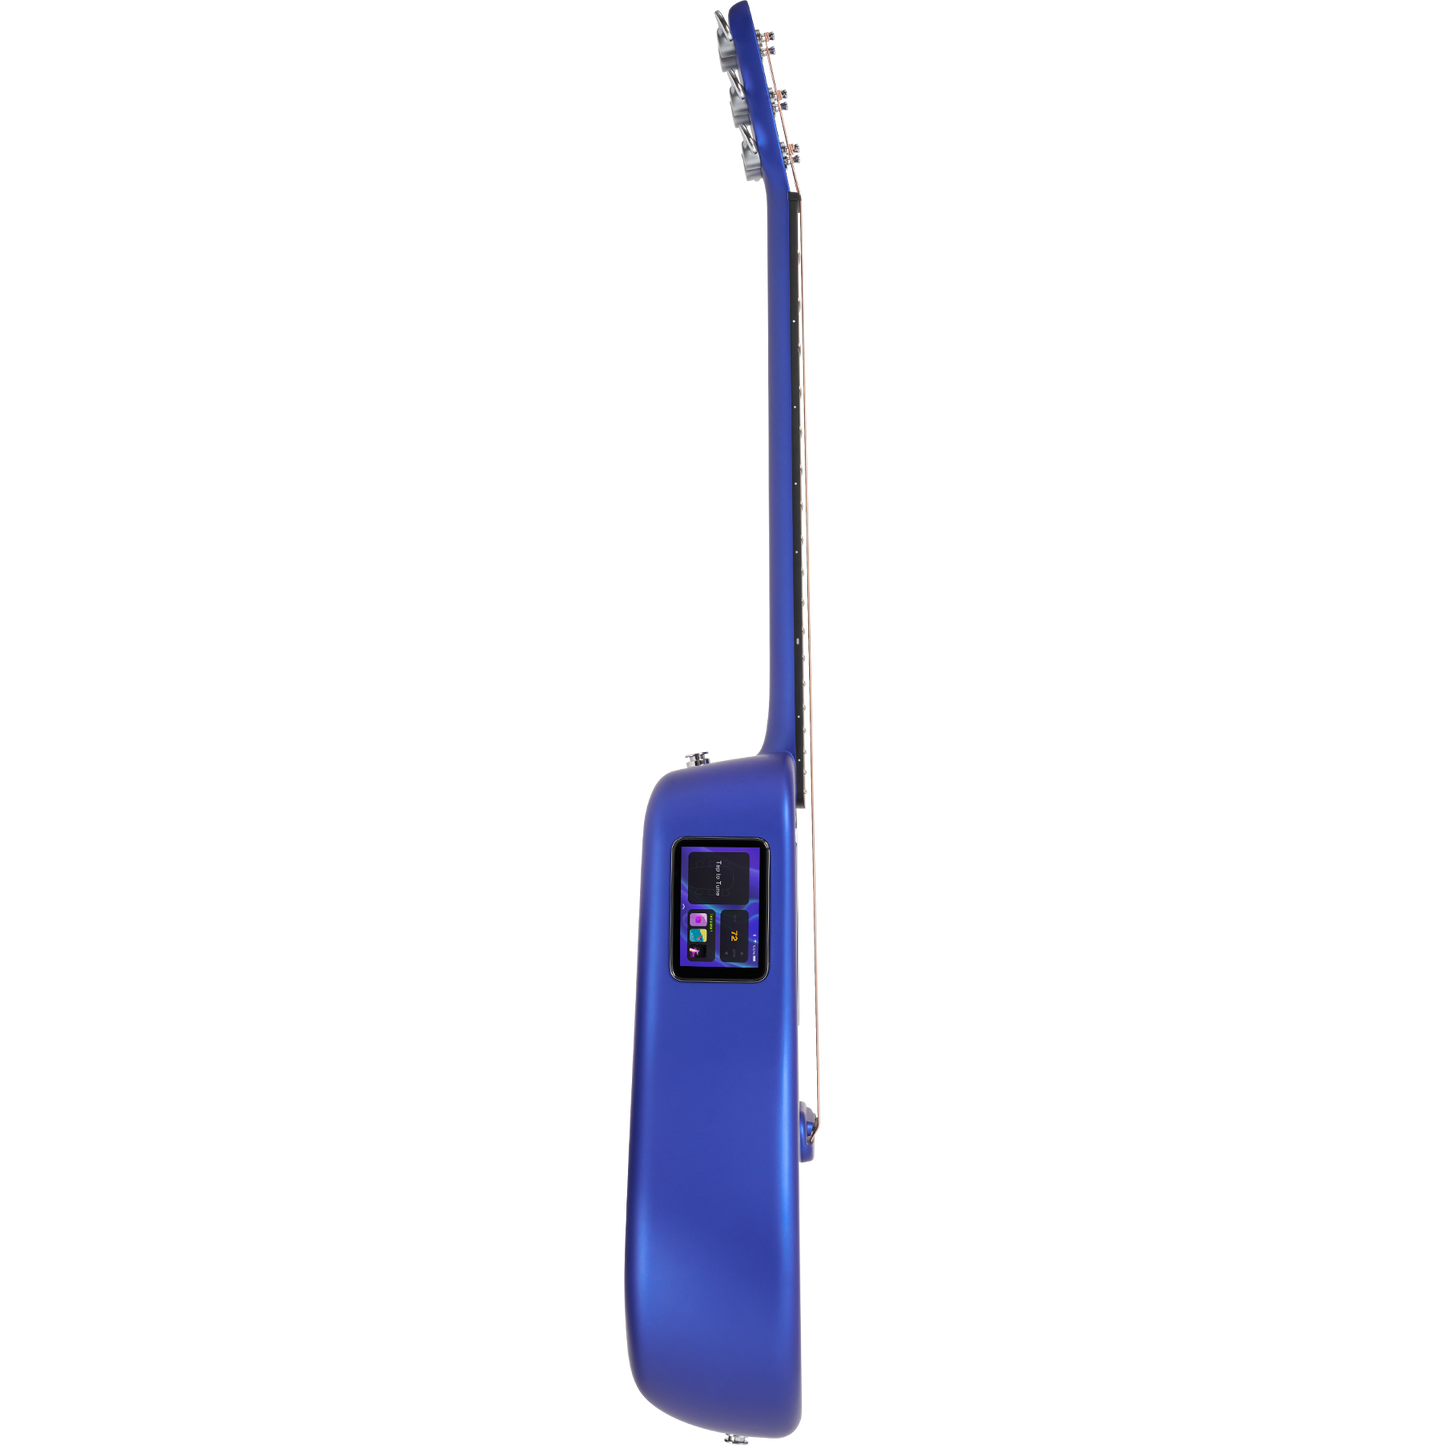 Lava Music Lava ME 3 36” Smart Guitar in Blue w/ Space Bag